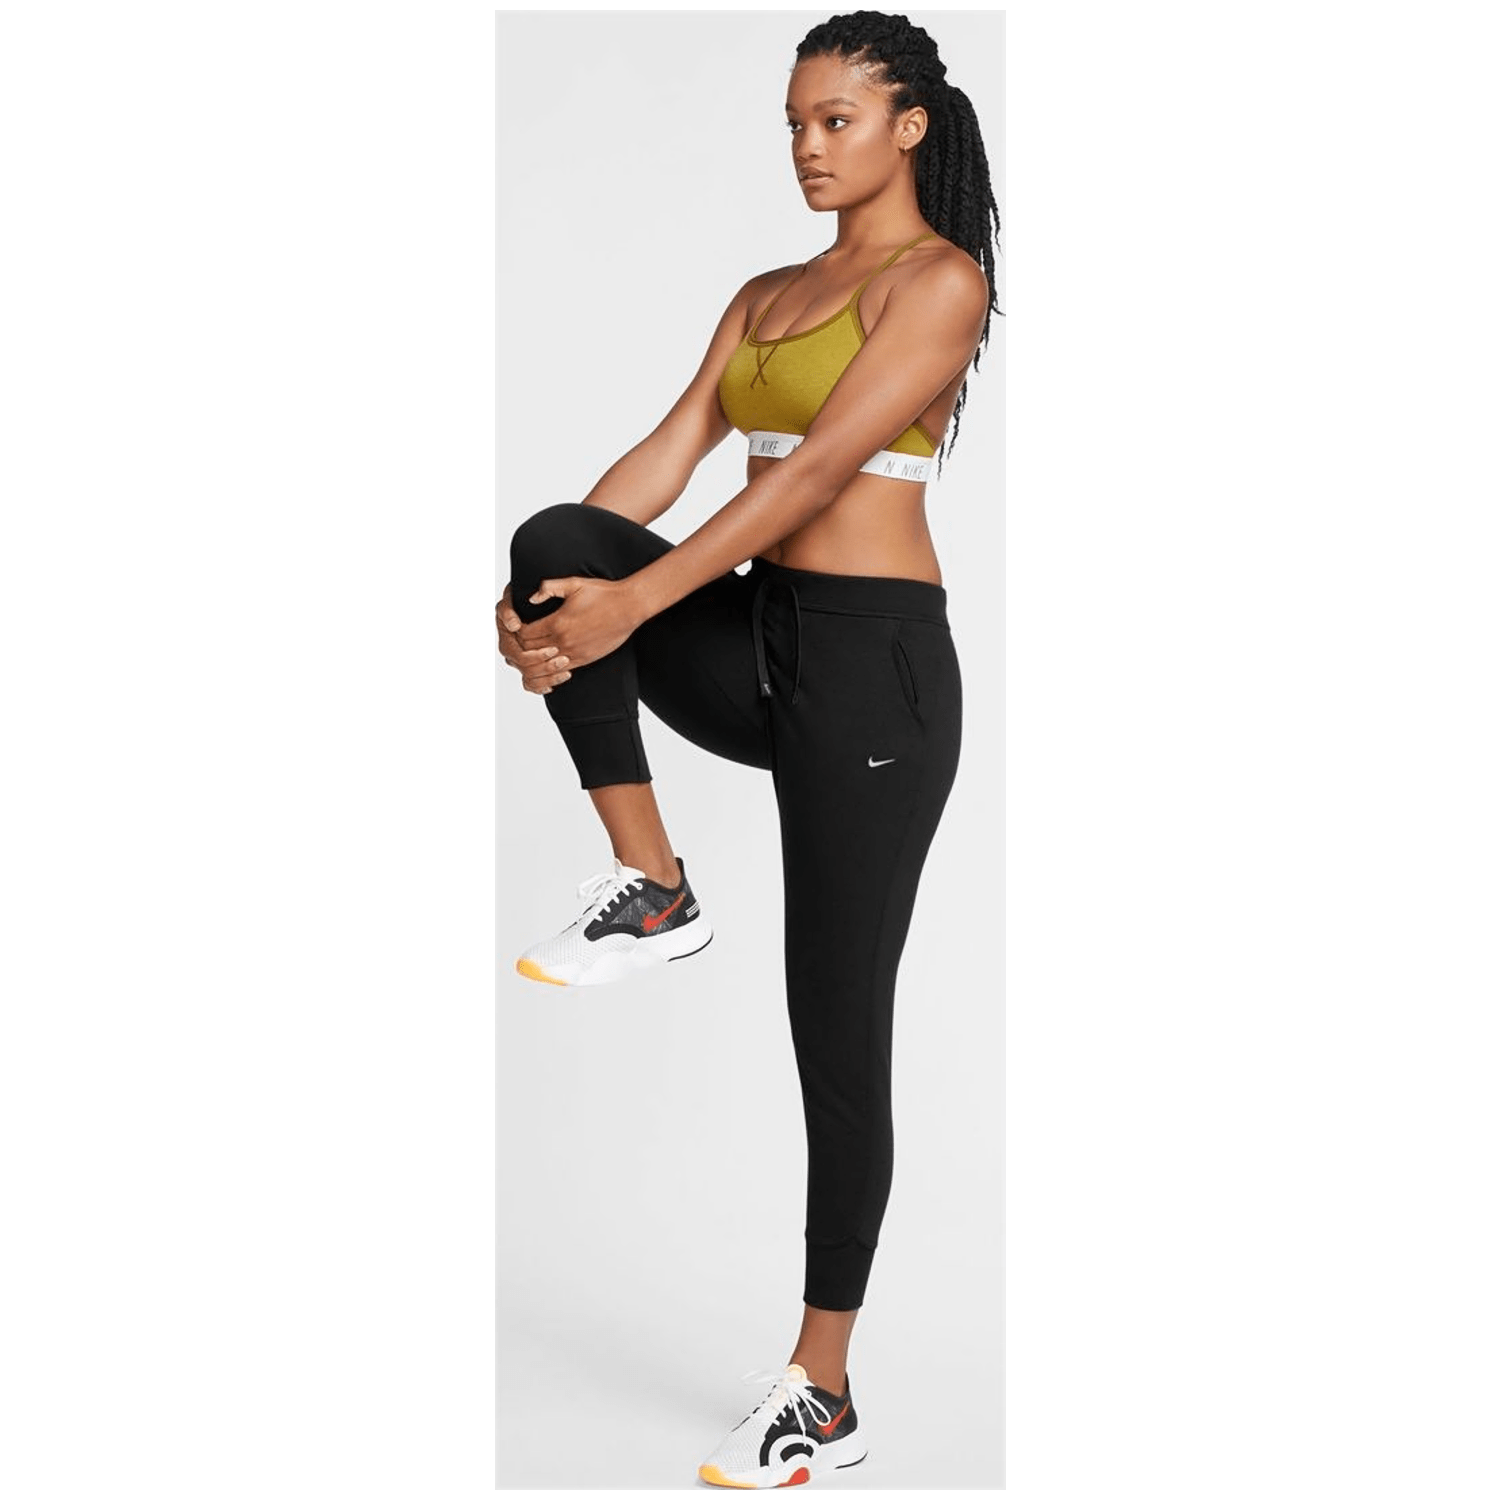 Nike Dri-FIT Get Fit Training Damen Trainingshose